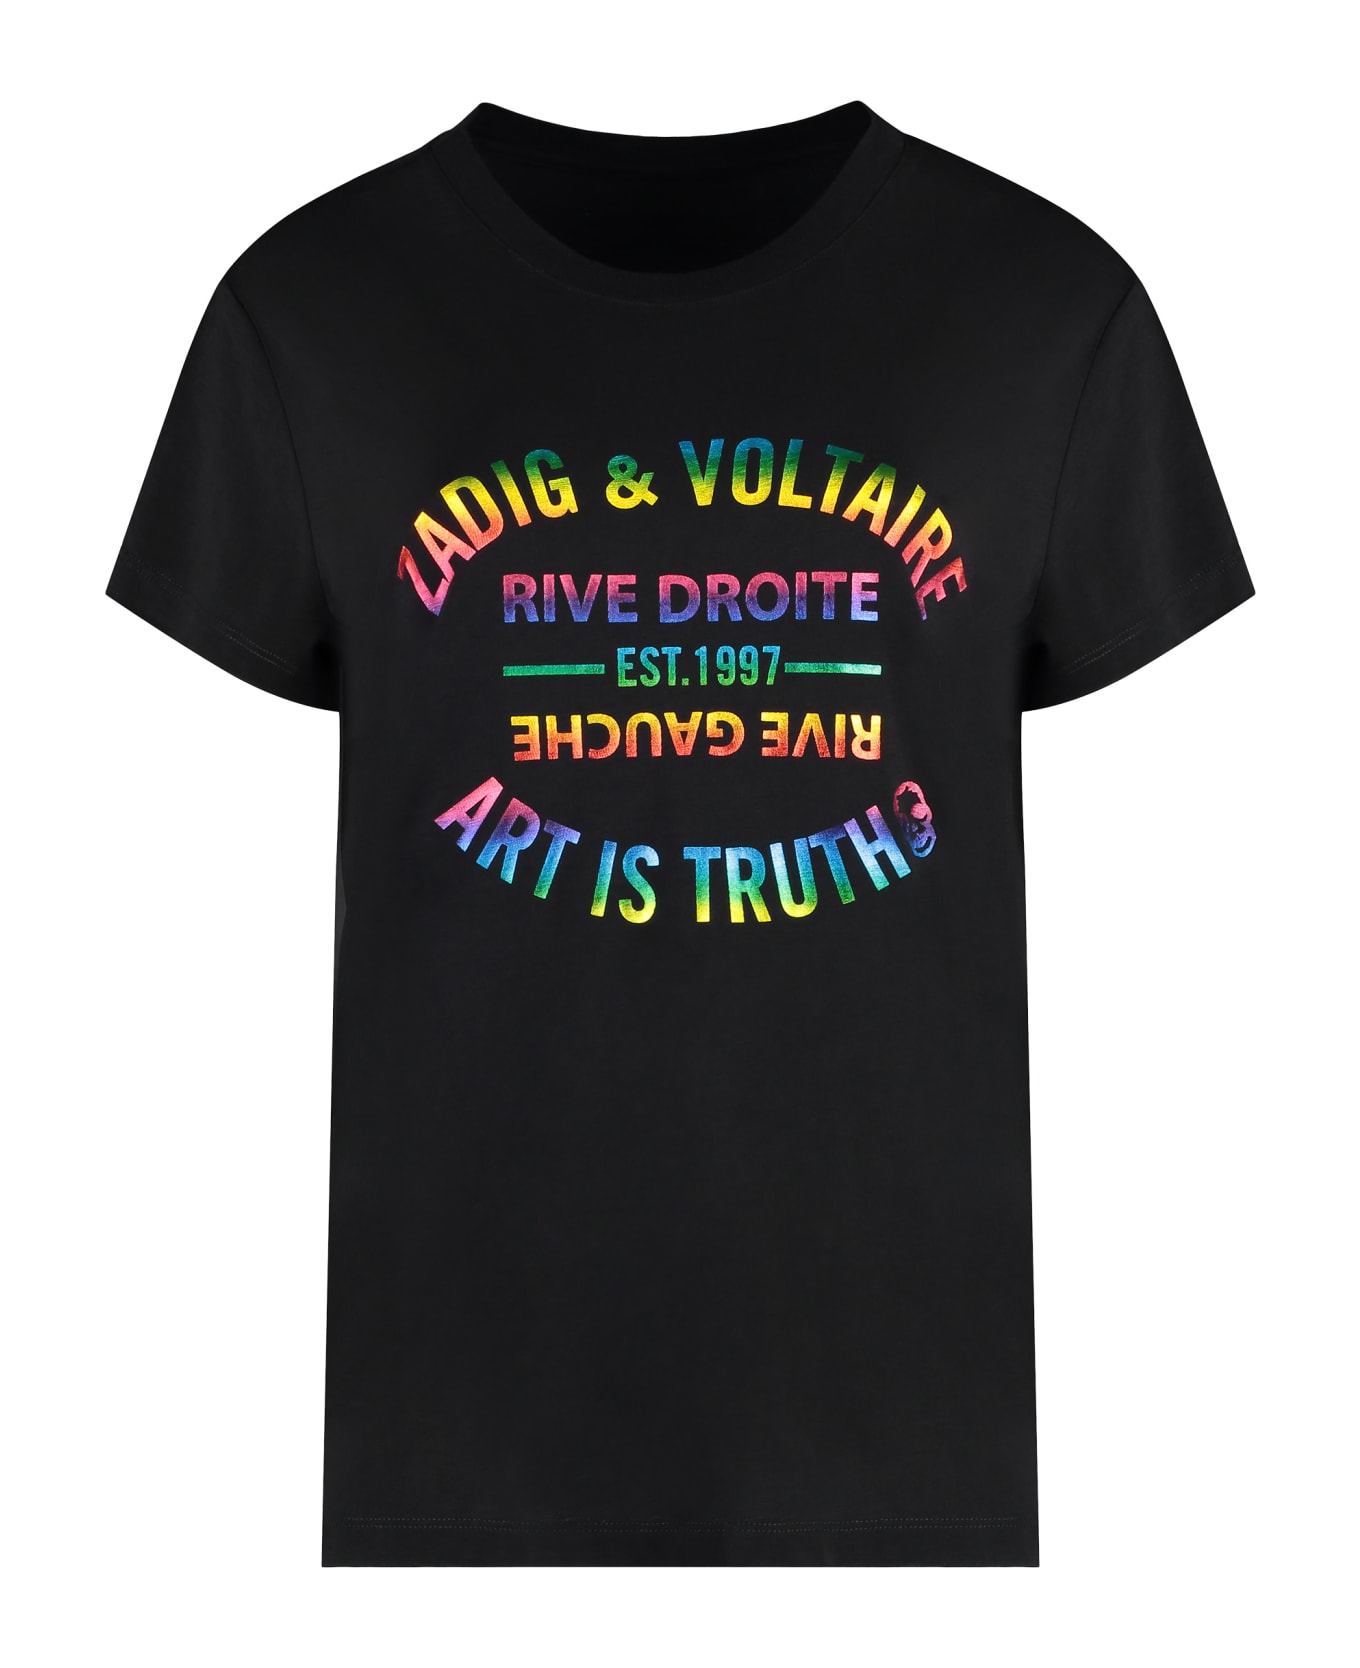 Zadig & Voltaire Cotton Blend Crew-neck T-shirt - black Tシャツ